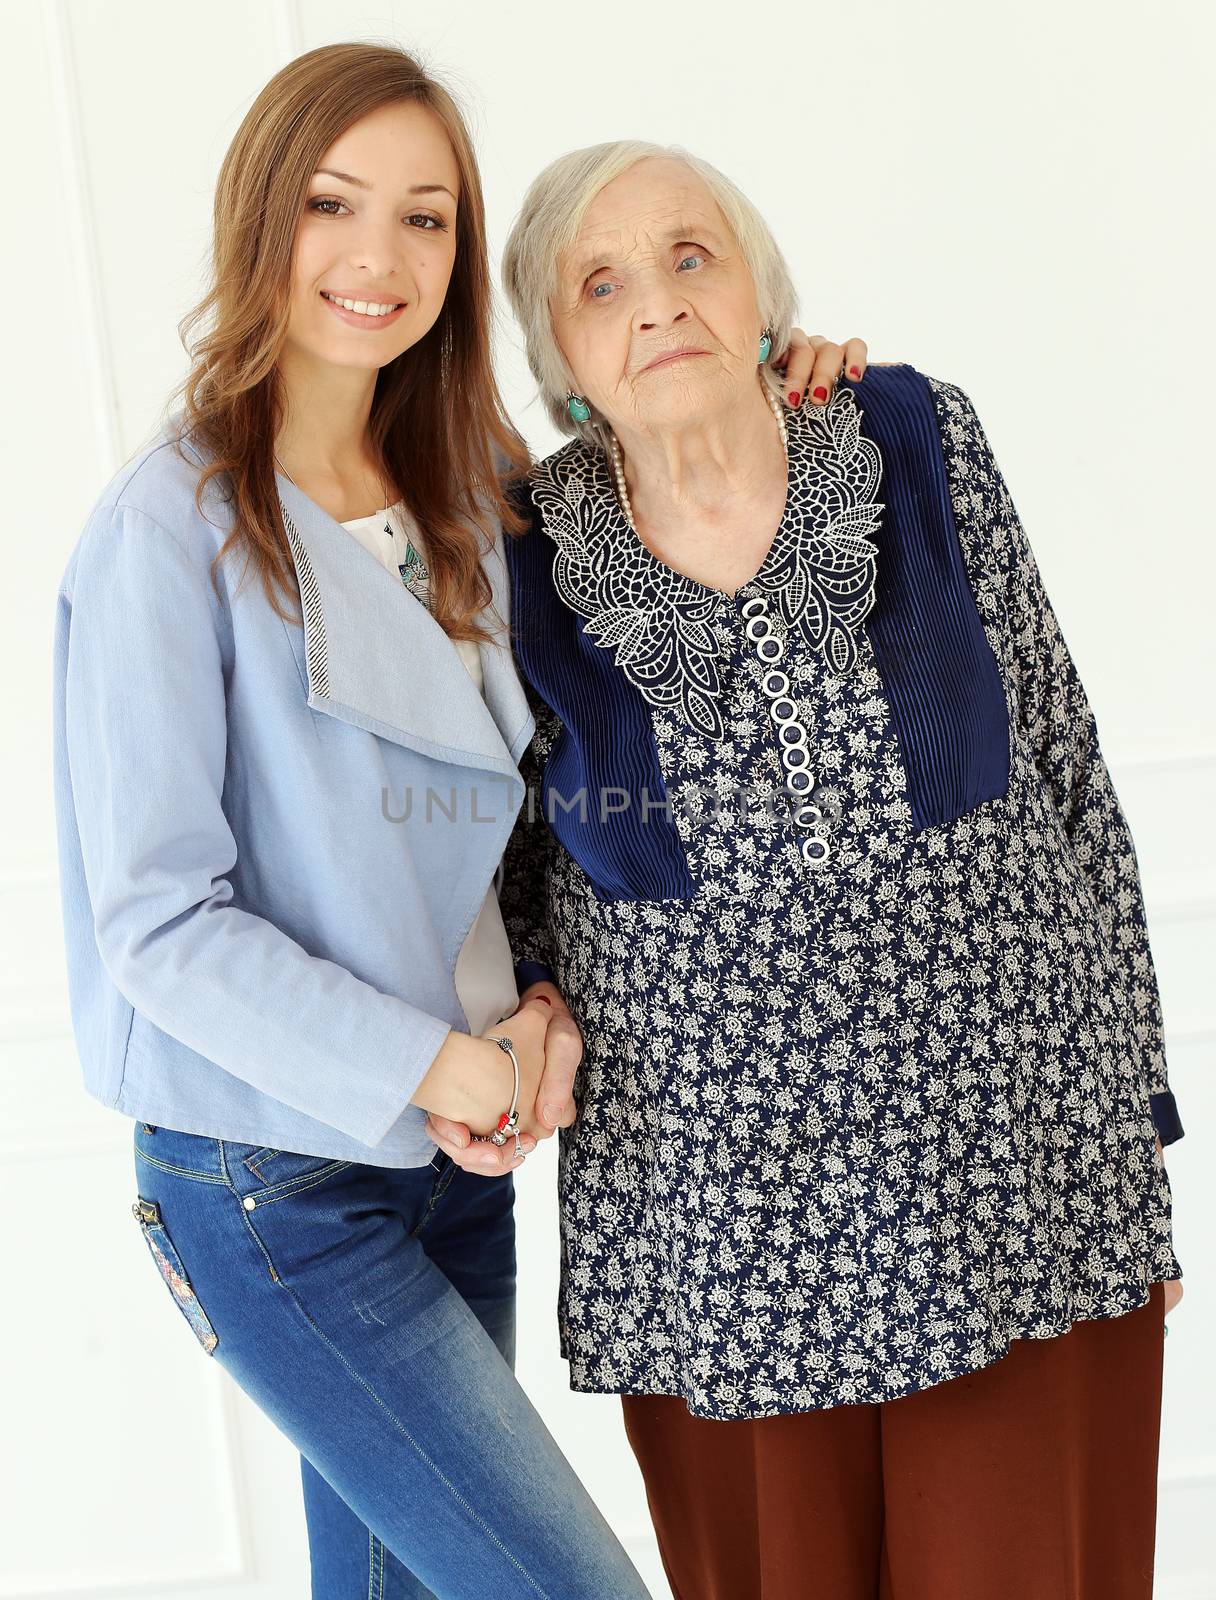 Elderly woman and beautiful granddaughter